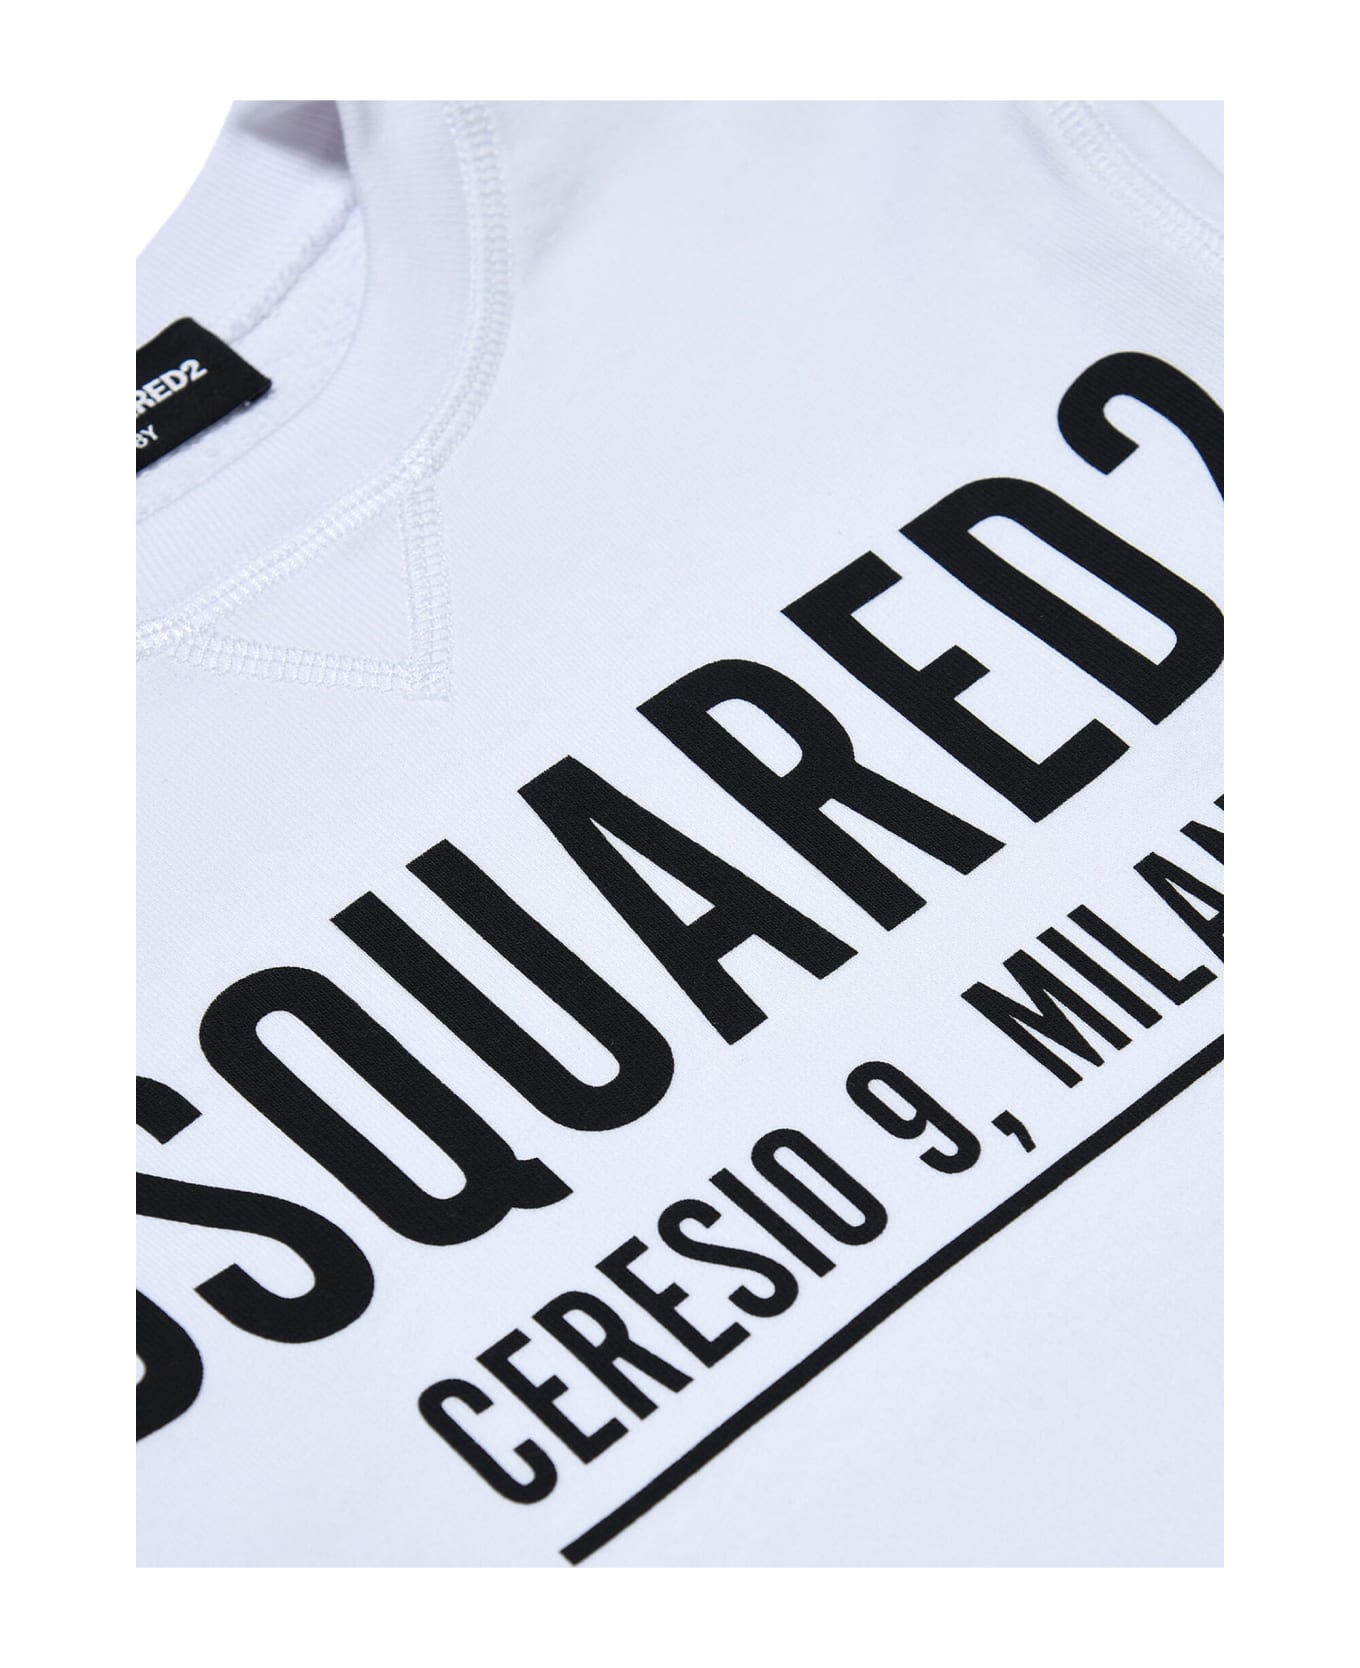 Dsquared2 D2s607u Relax Sweat-shirt Dsquared - Dq100 ニットウェア＆スウェットシャツ